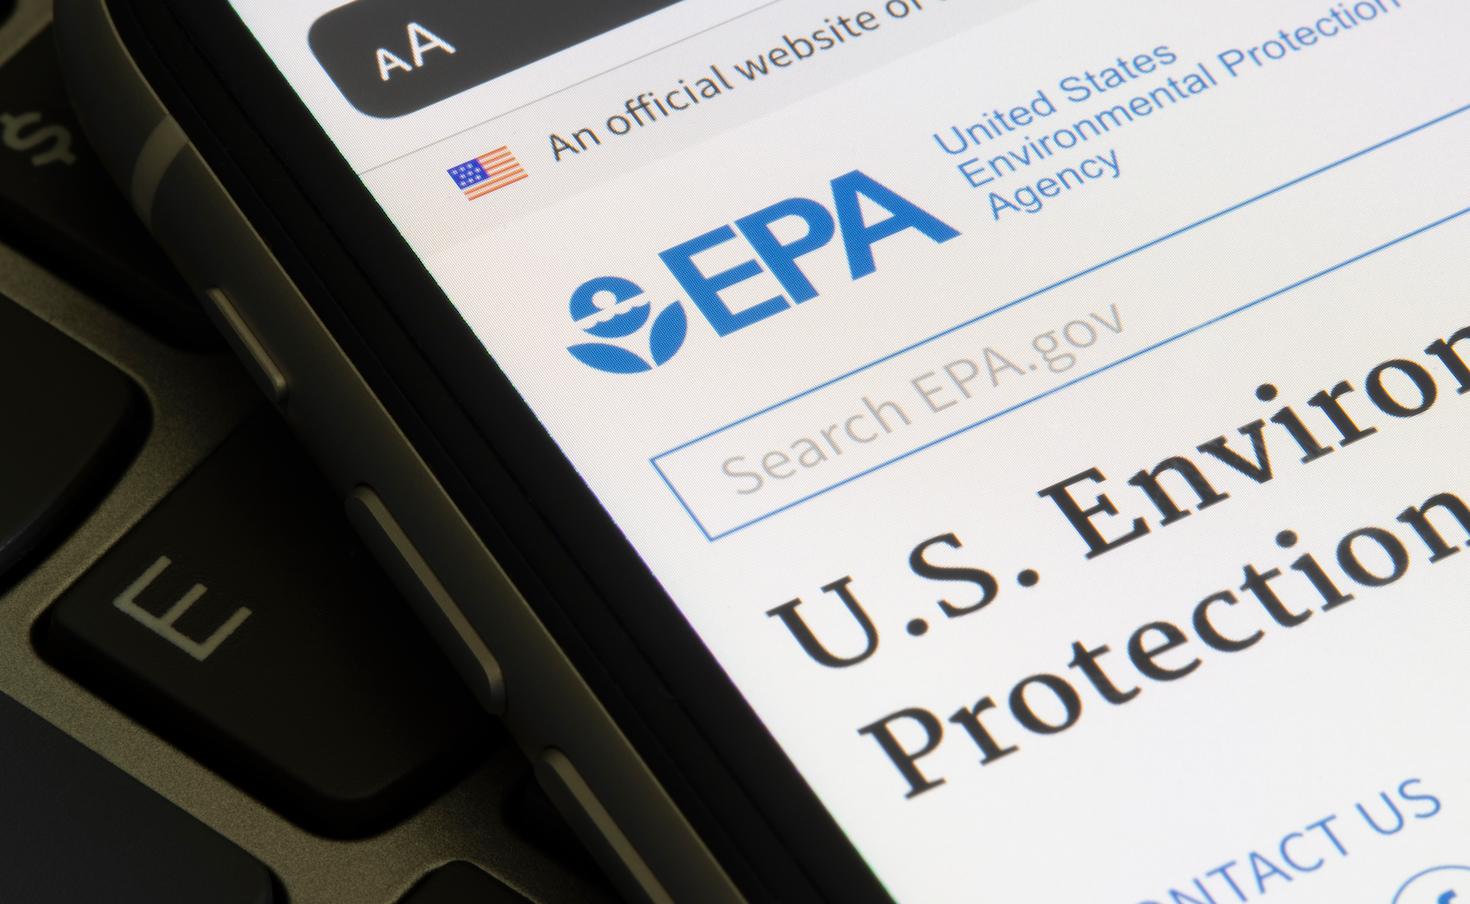 EPA web site